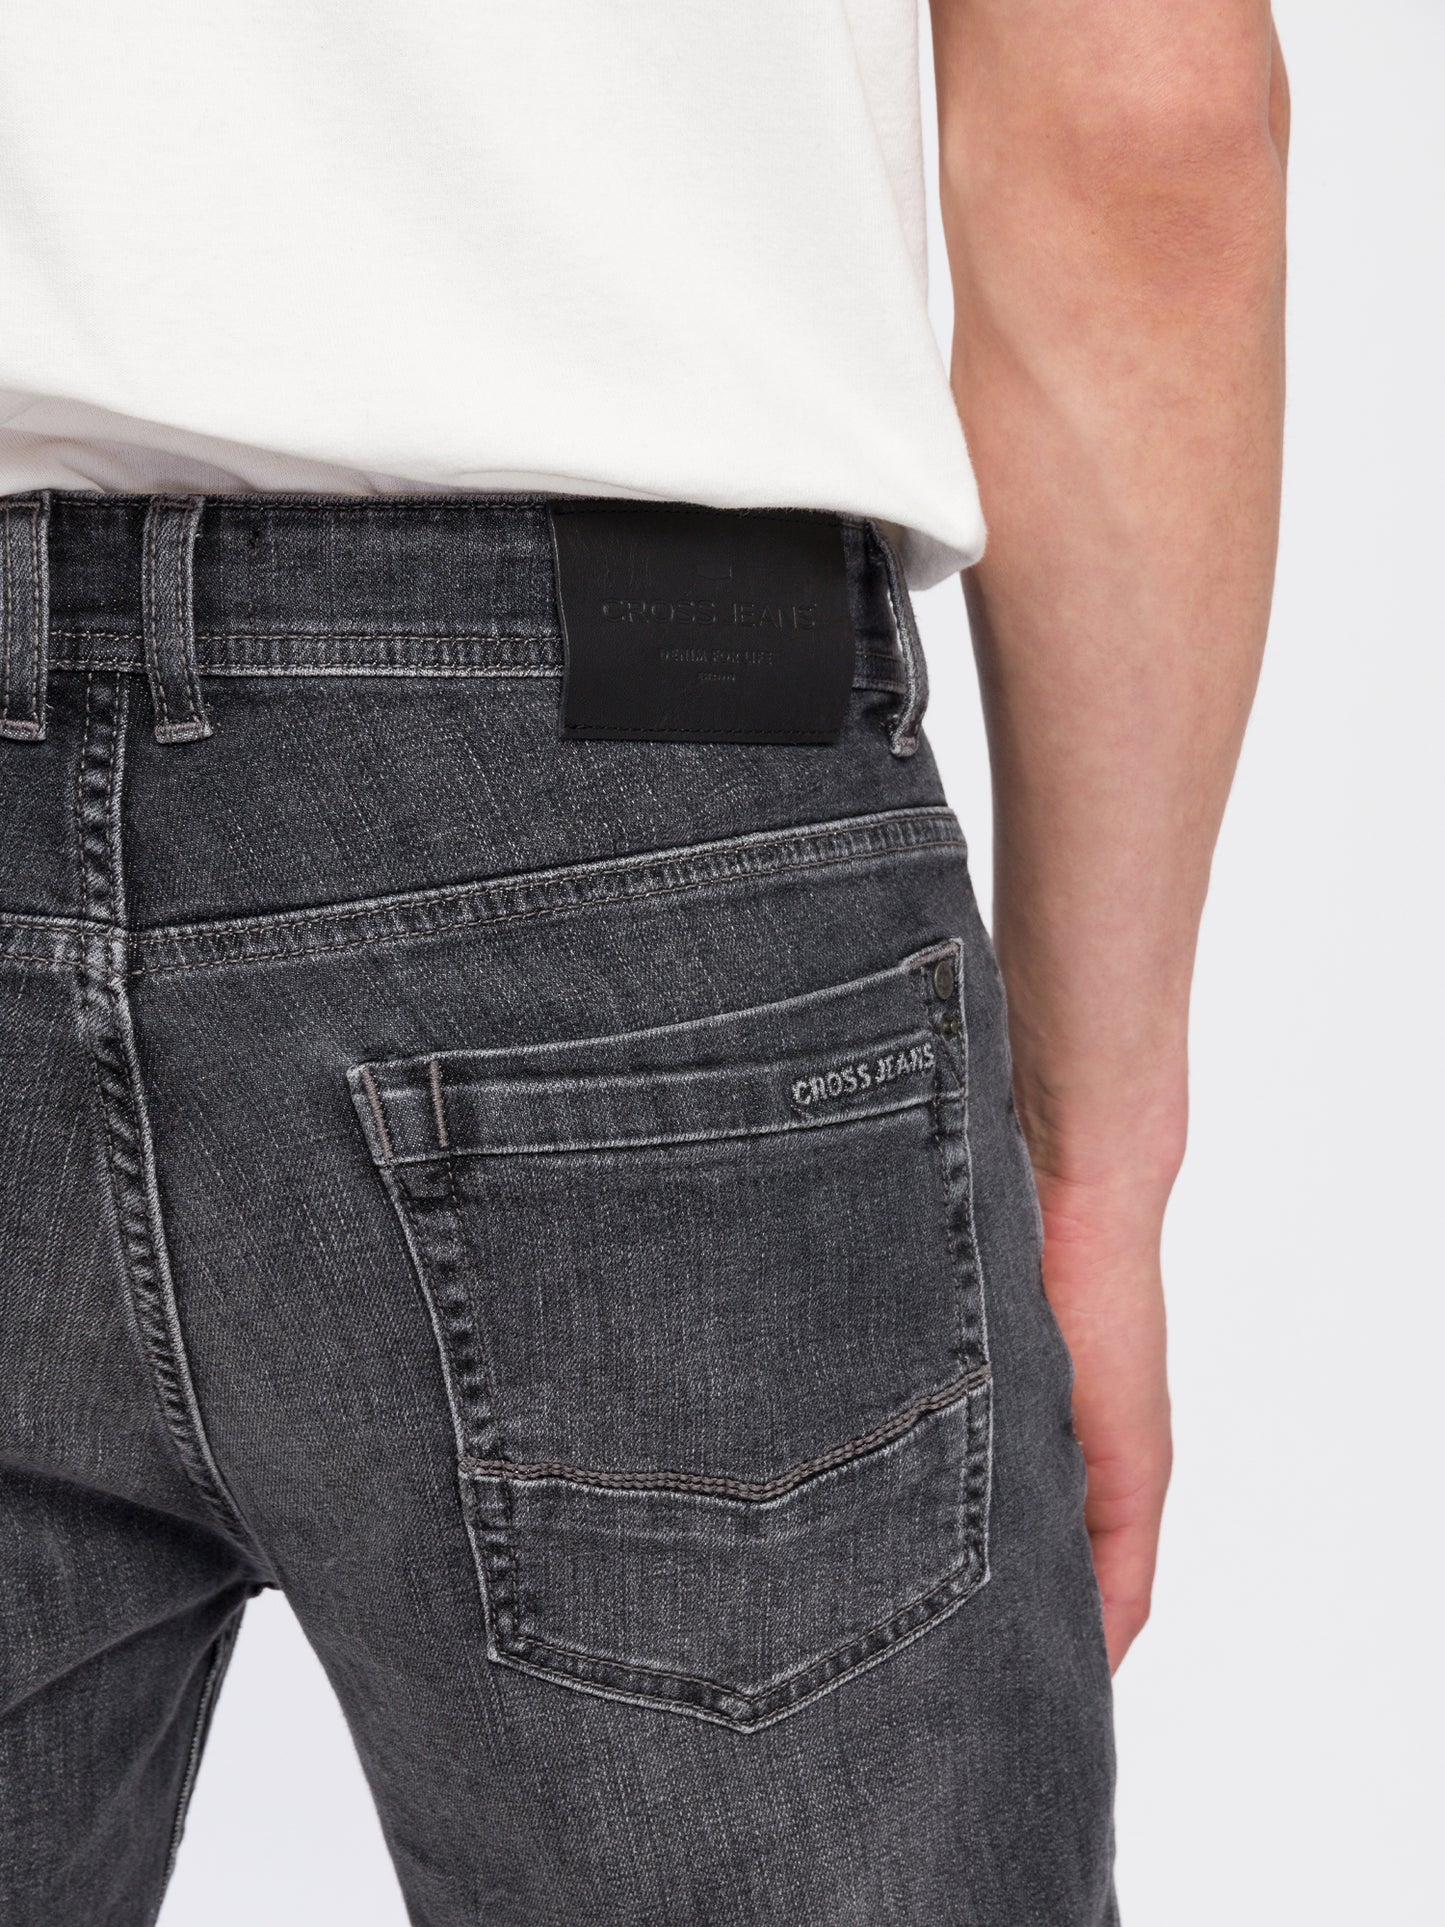 Antonio men's jeans relaxed fit regular waist straight leg dark grey